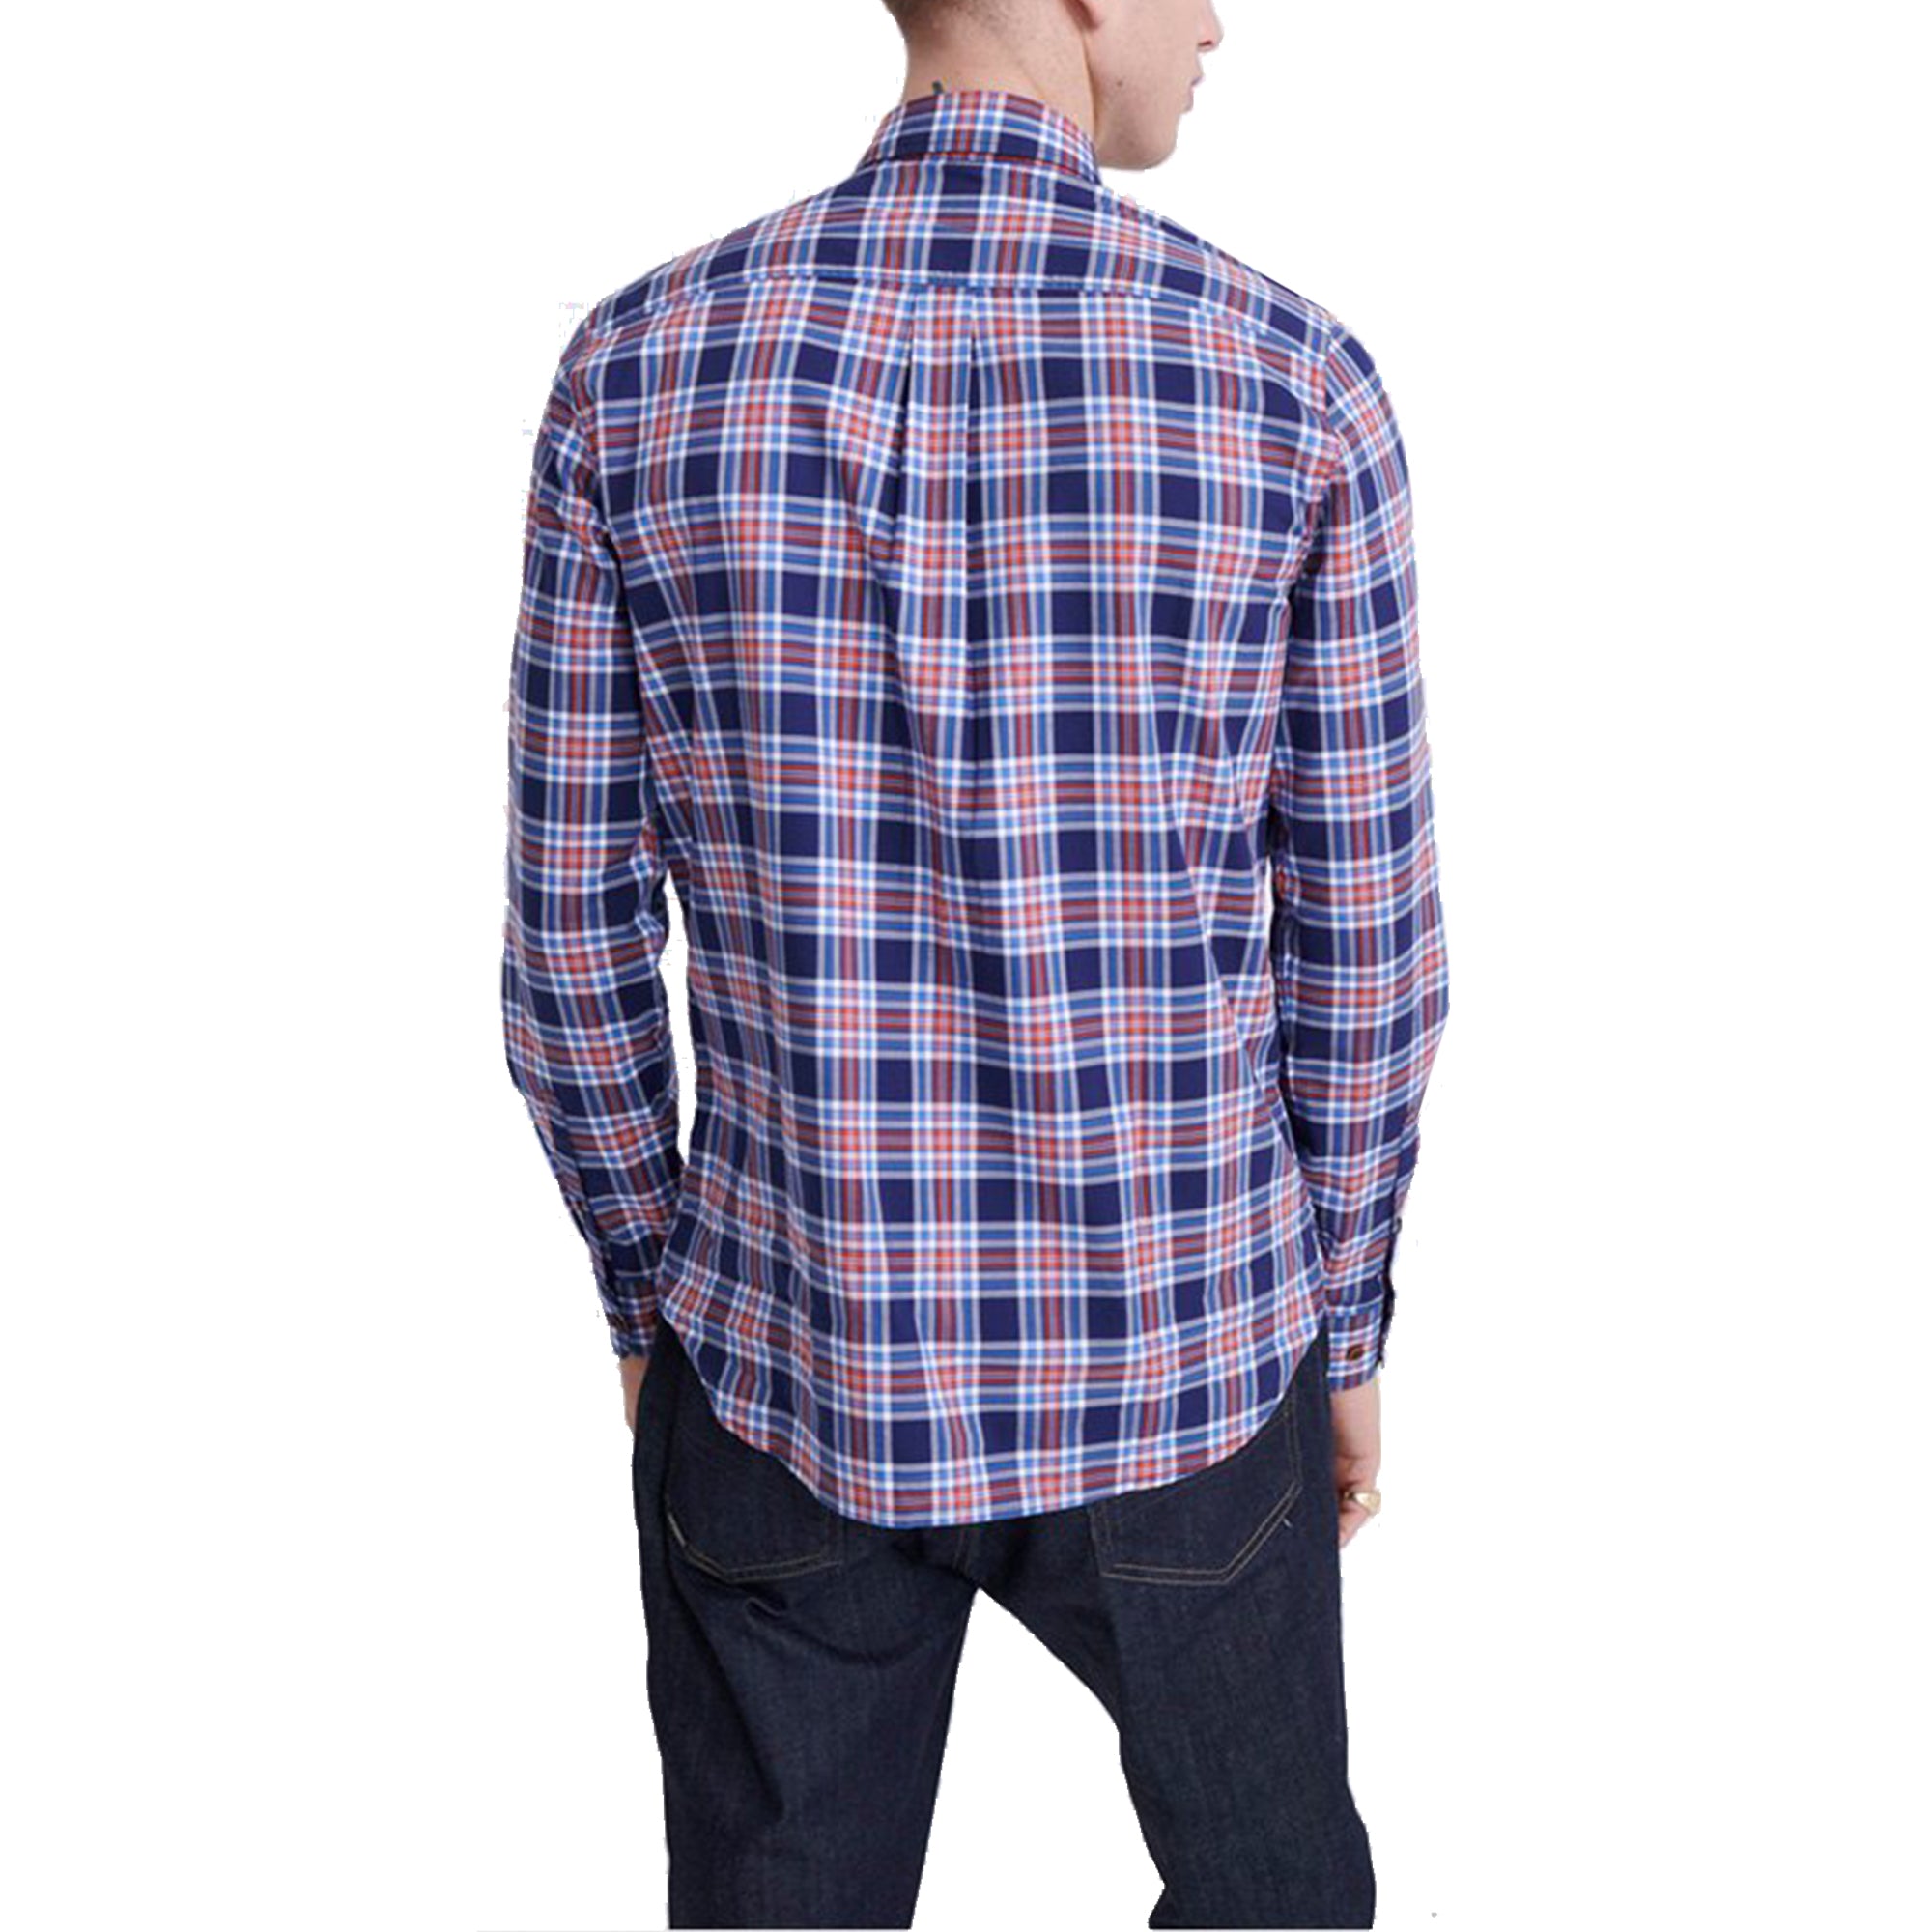 Superdry Workwear Lite Long Sleeve Shirt - Navy Check